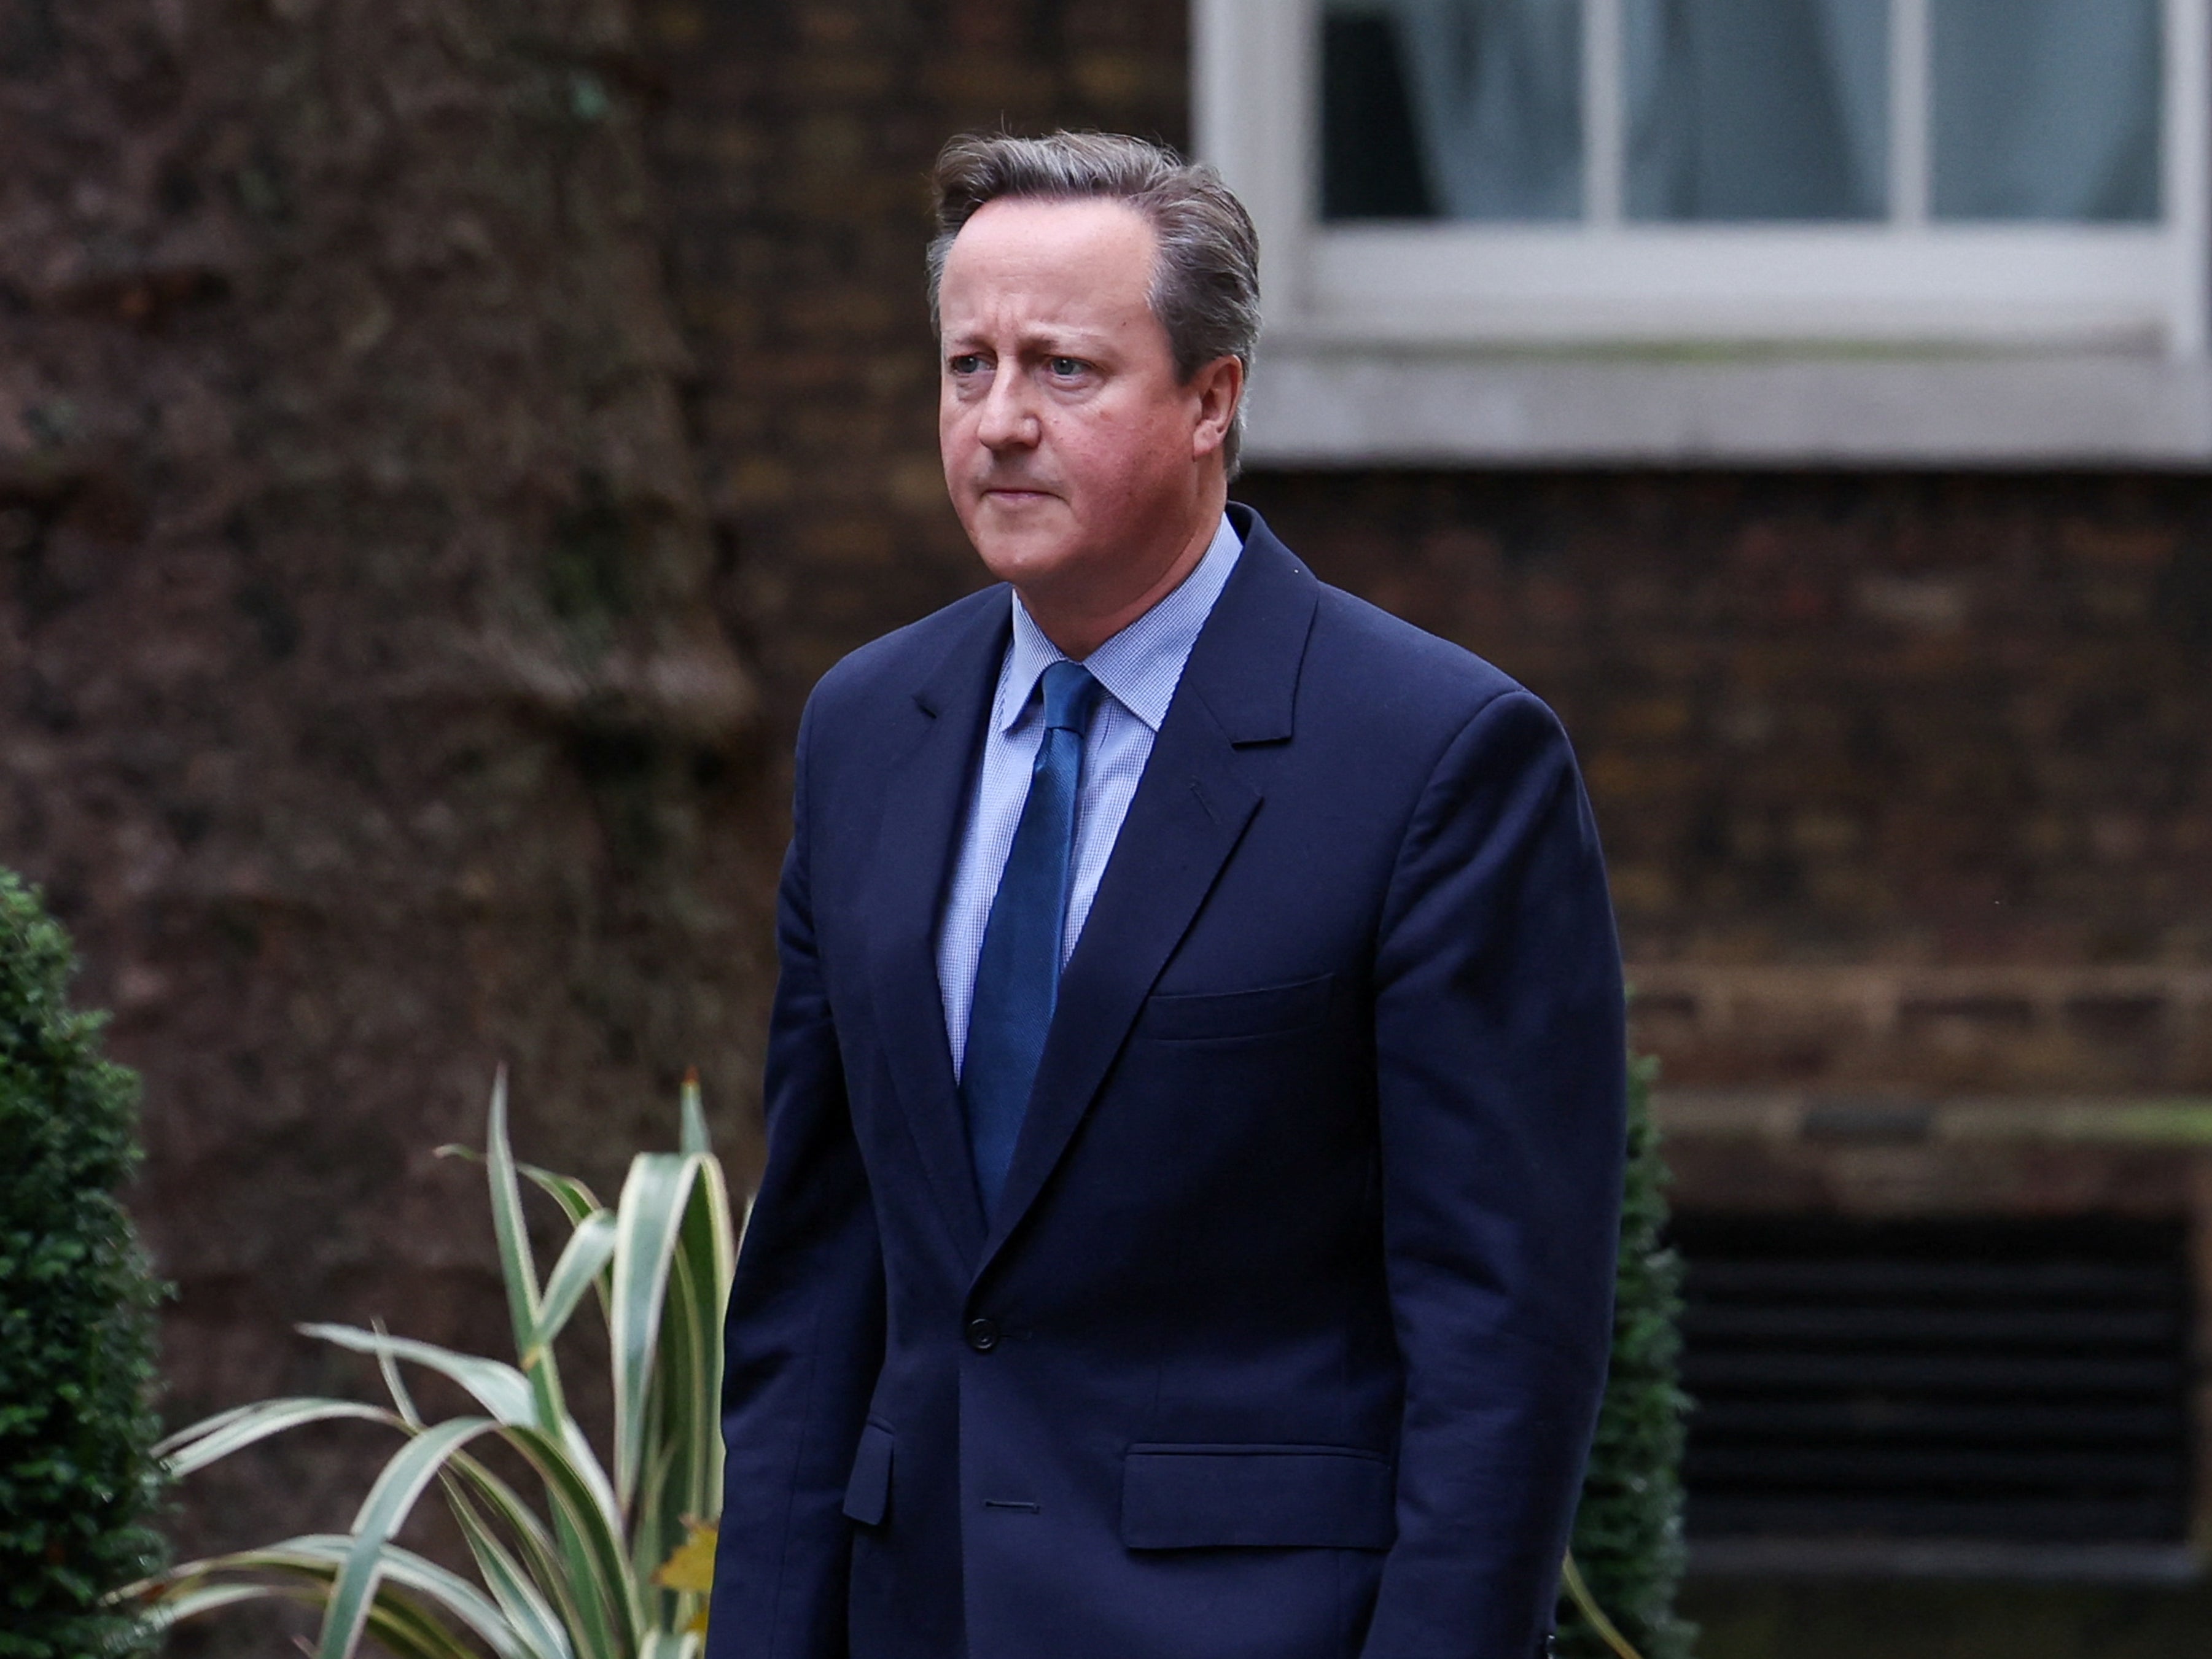 David Cameron re-enters Downing Street